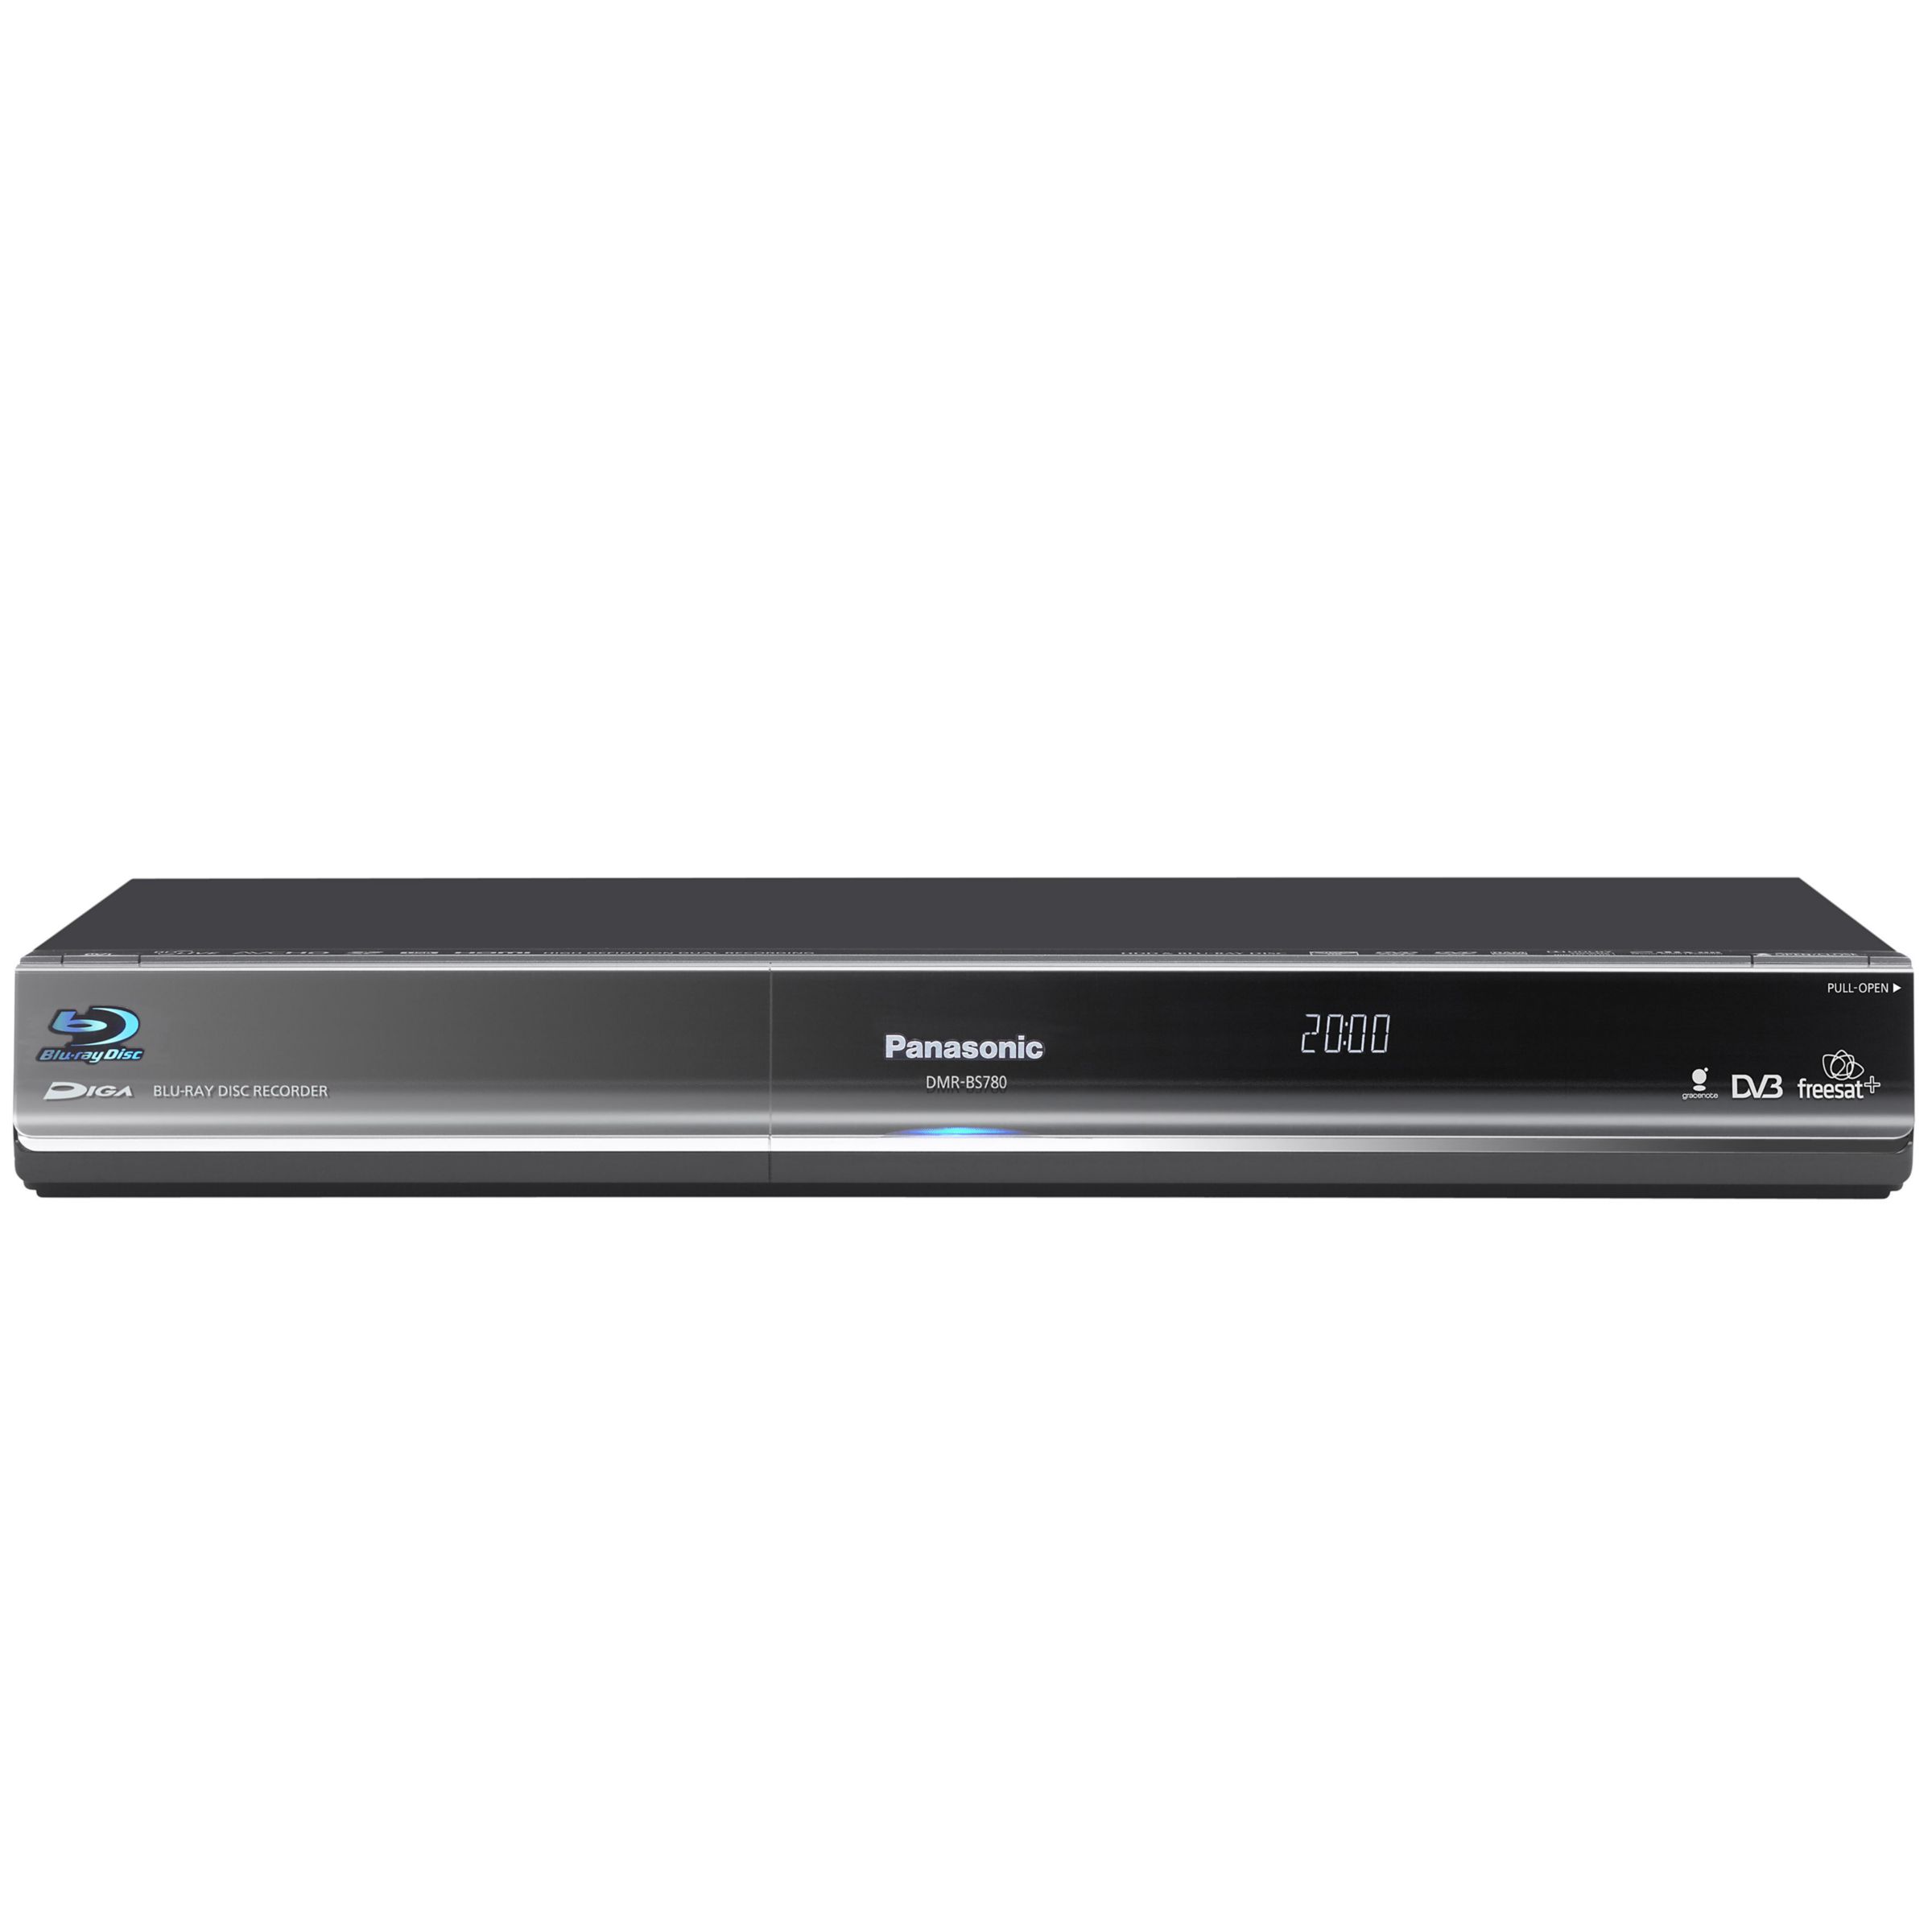 Panasonic DMR-BS780 Blu-ray/DVD/HDD 250GB Digital Recorder with Built-in freesat at John Lewis